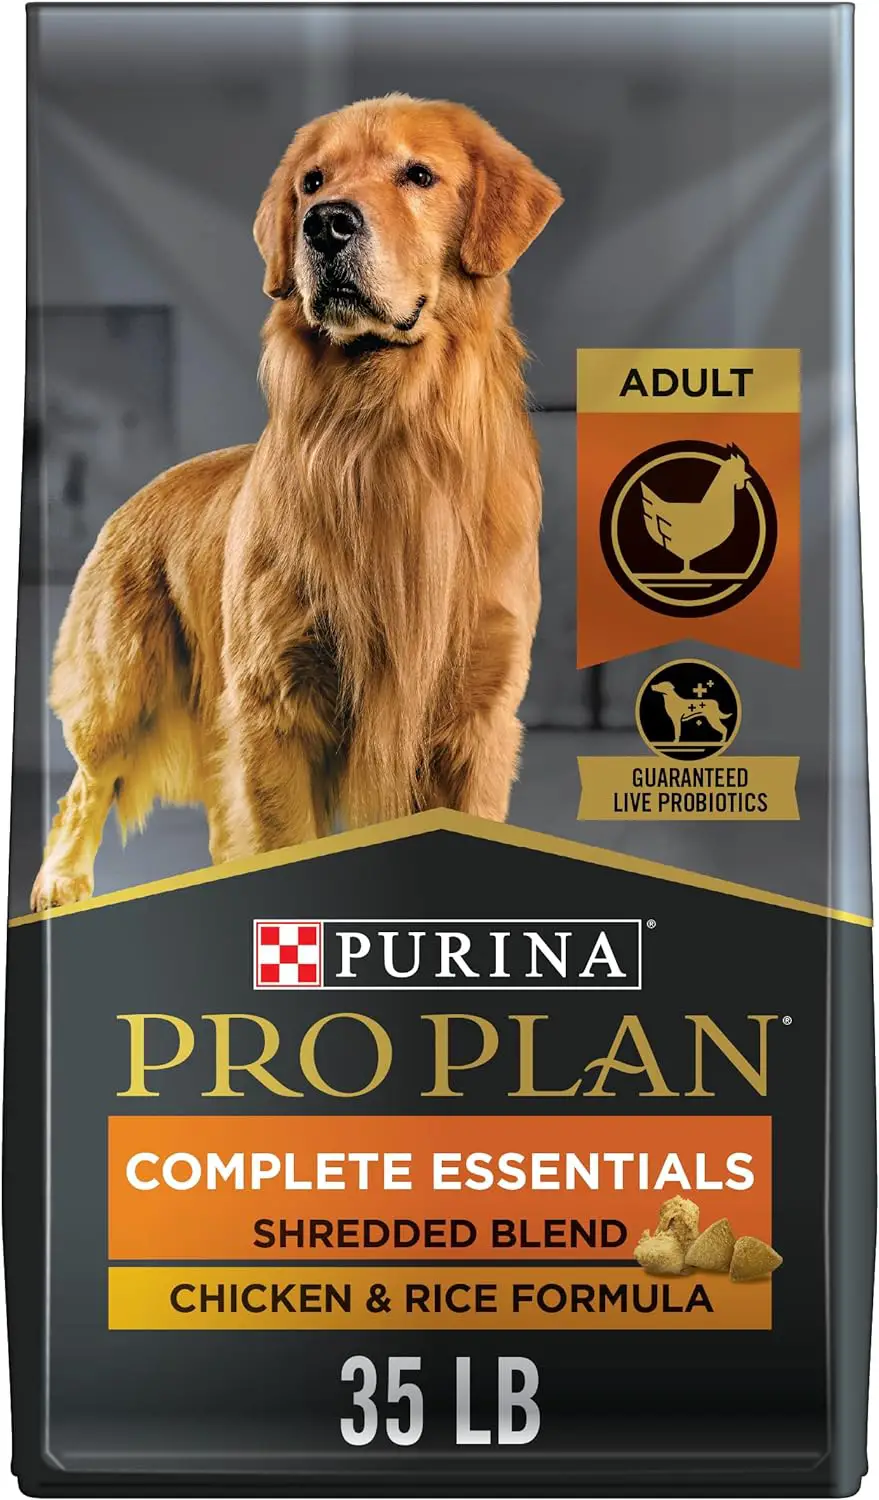 Purina Pro Plan High Protein Shredded Blend Chicken & Rice Formula with Probiotics